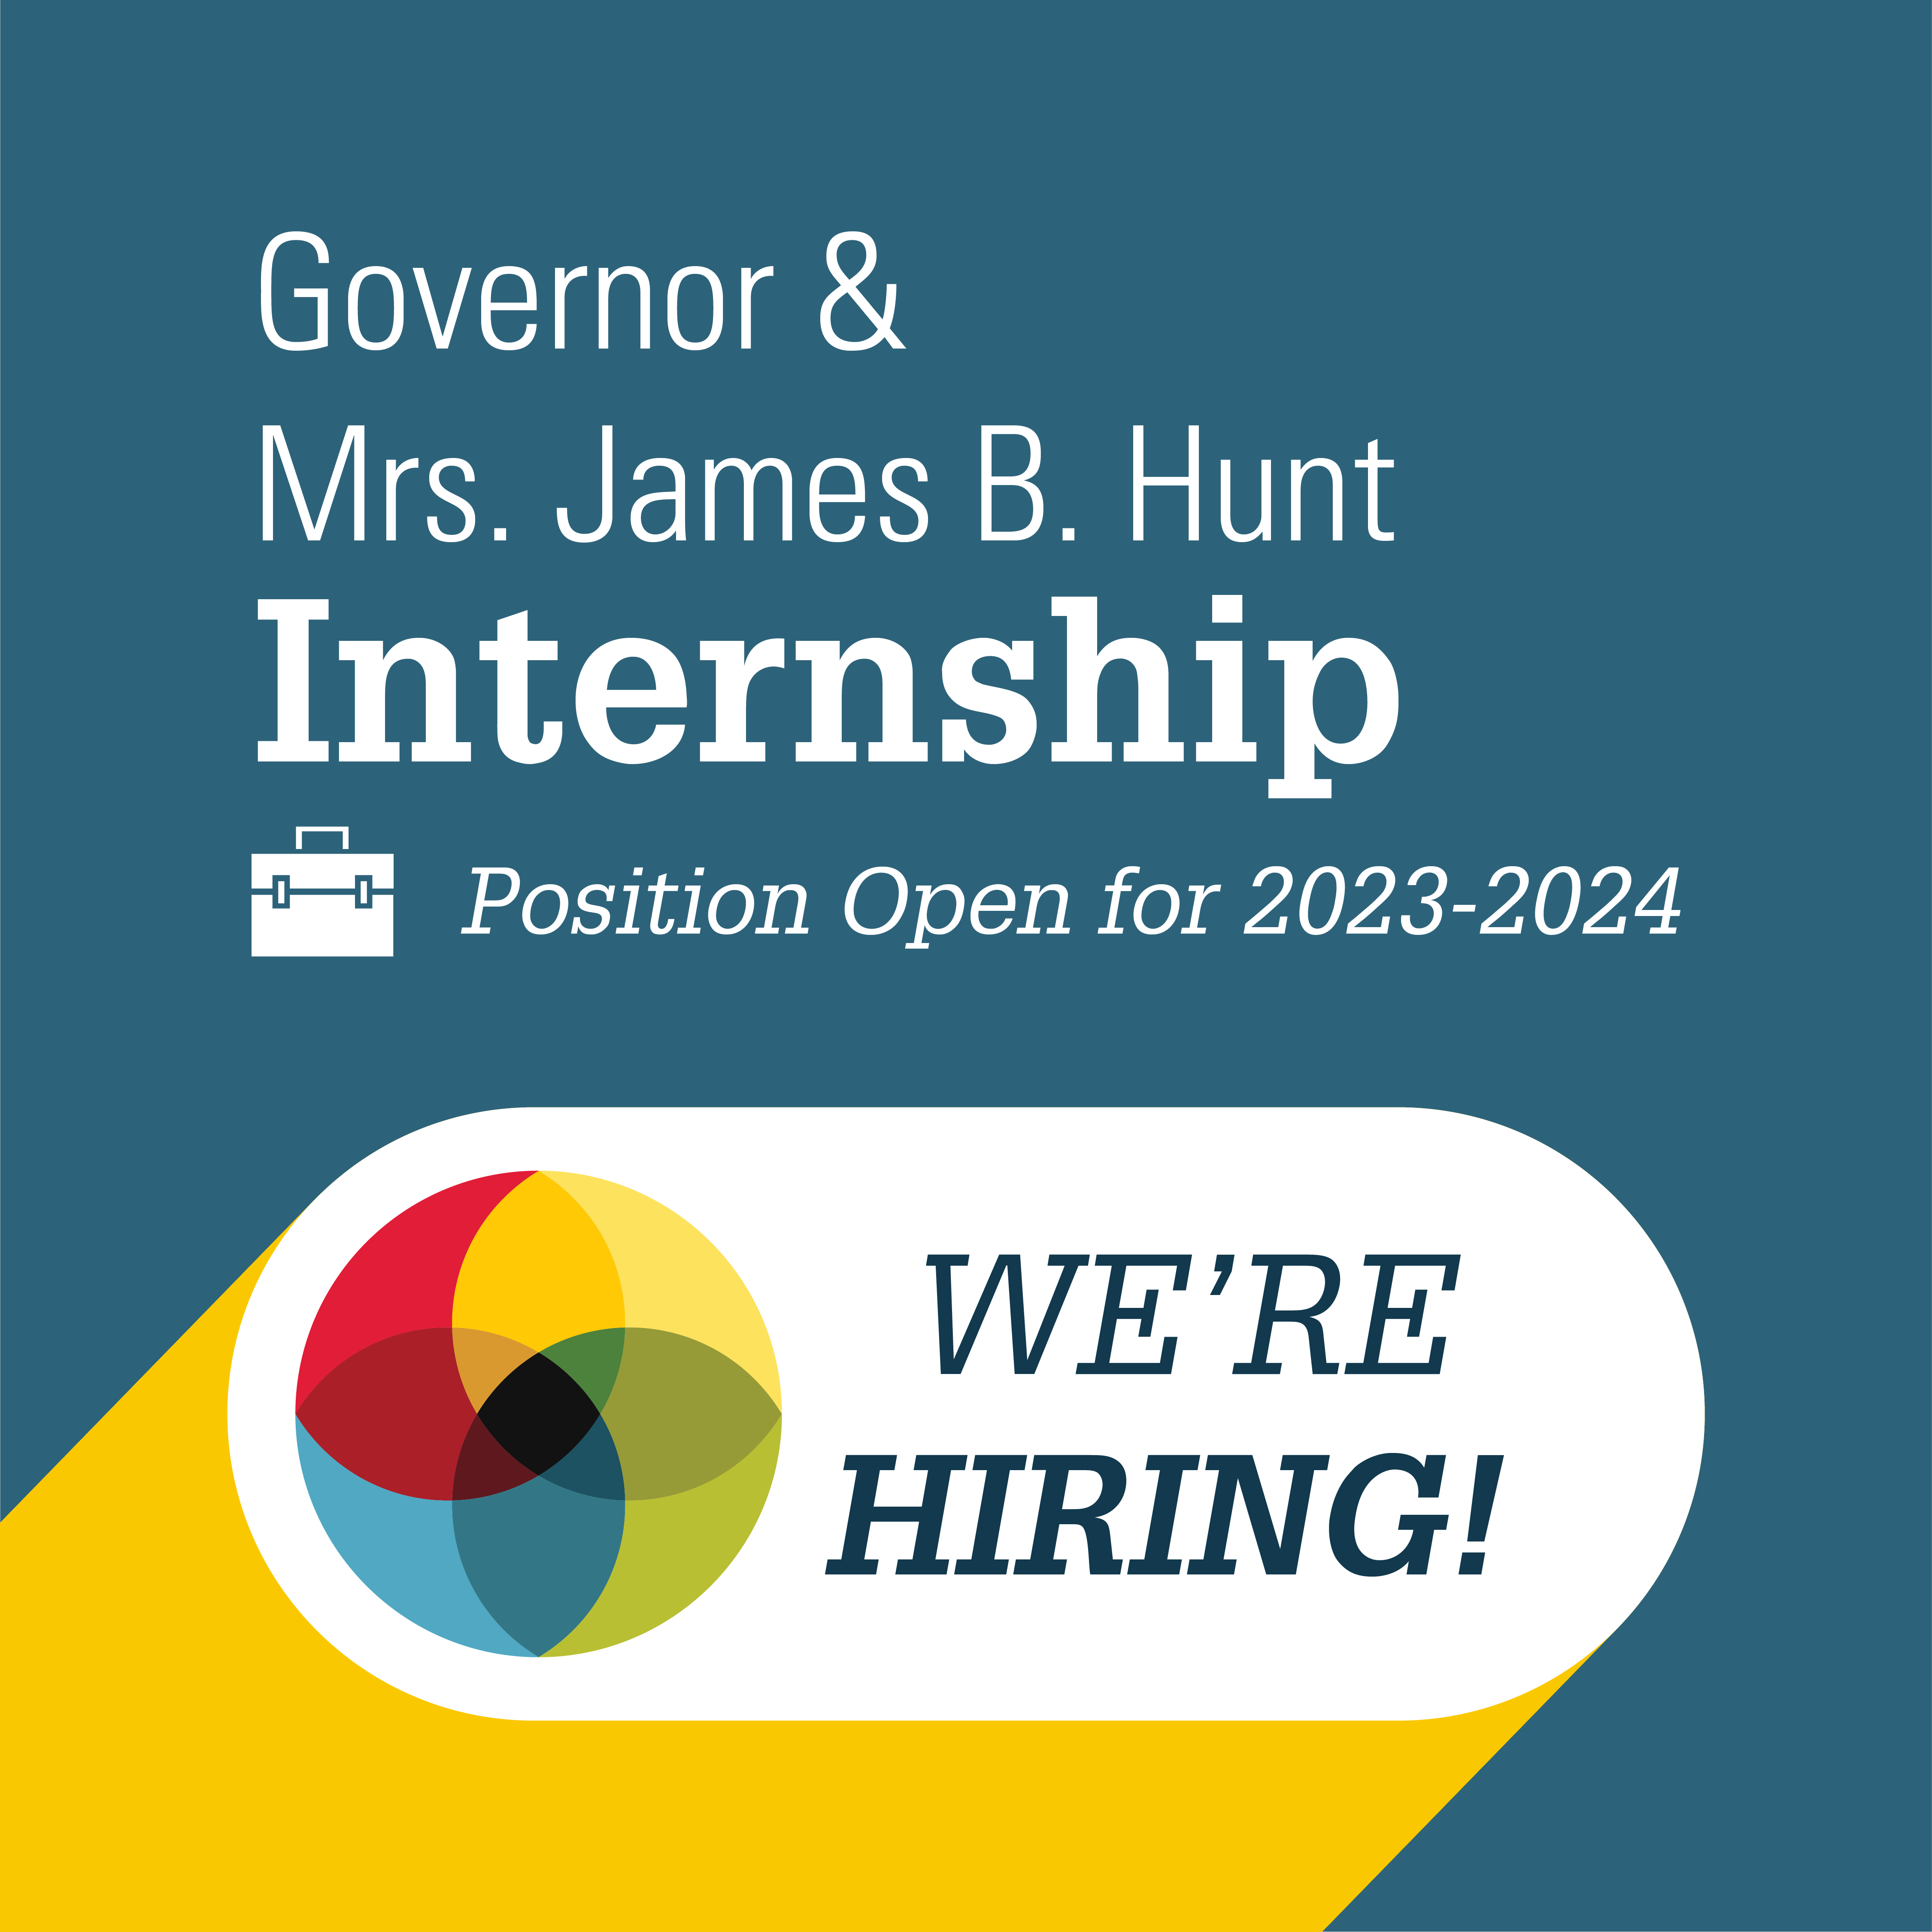 Graphic advertising the Governor & Mrs. James B. Hunt Internship